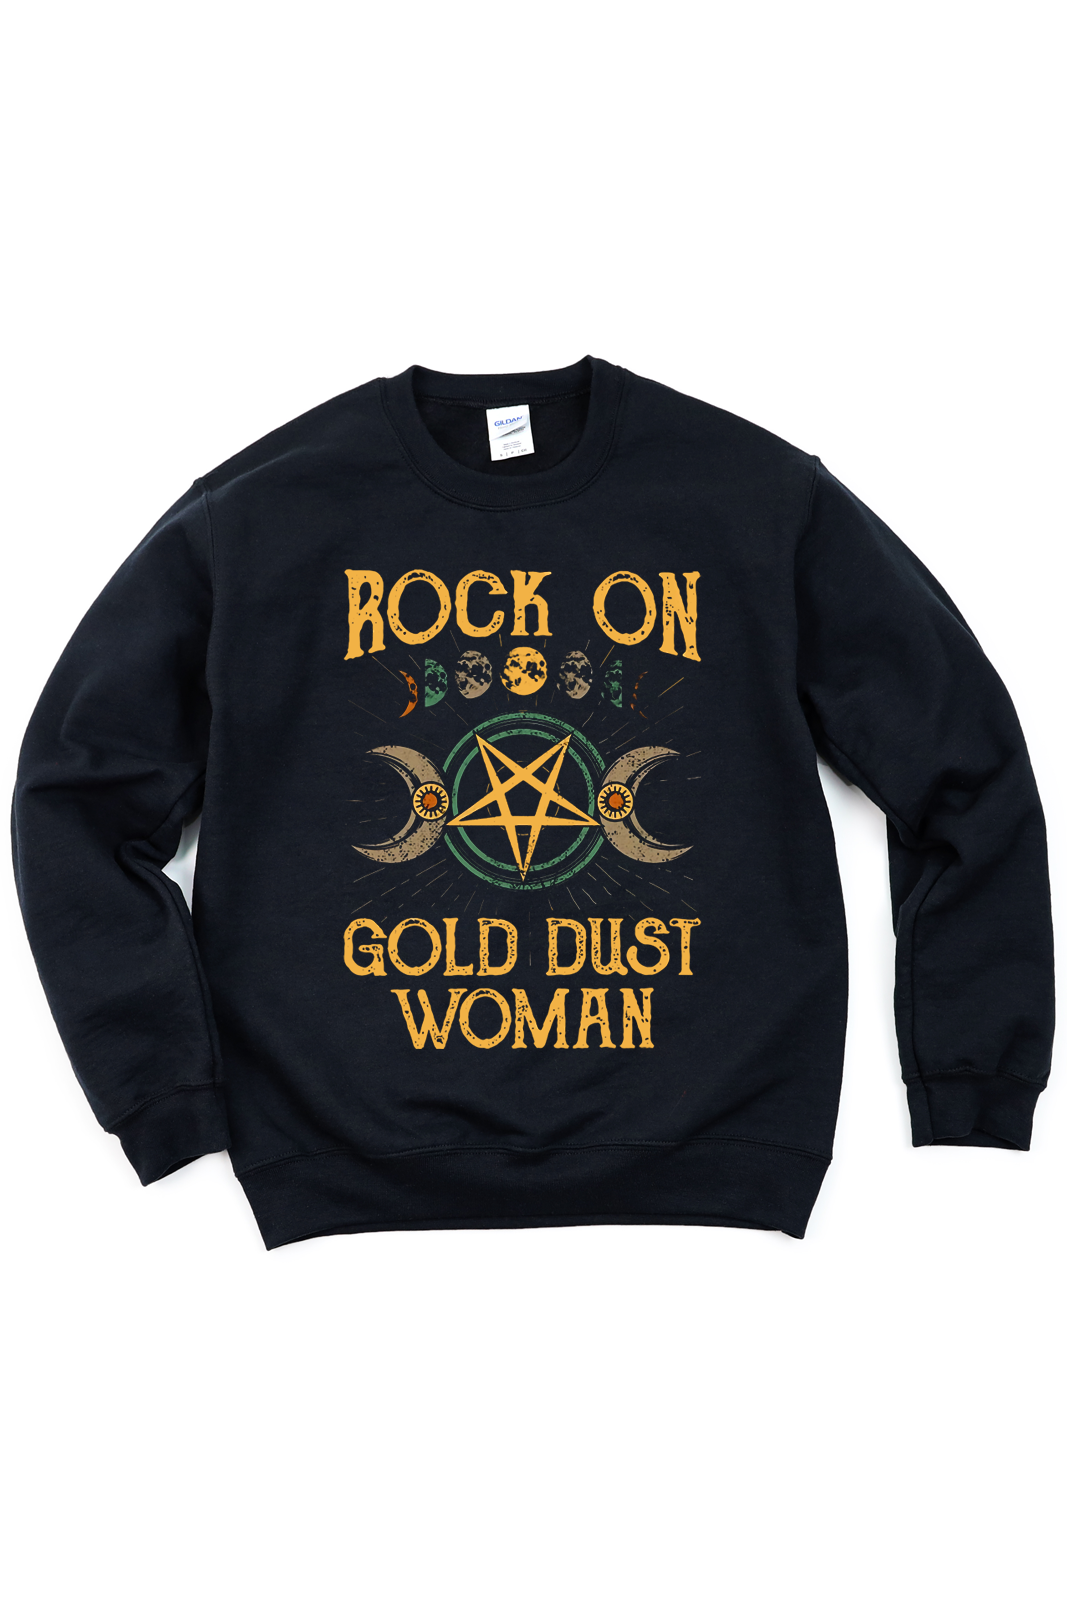 Gold Dust Woman Tee/Sweatshirt